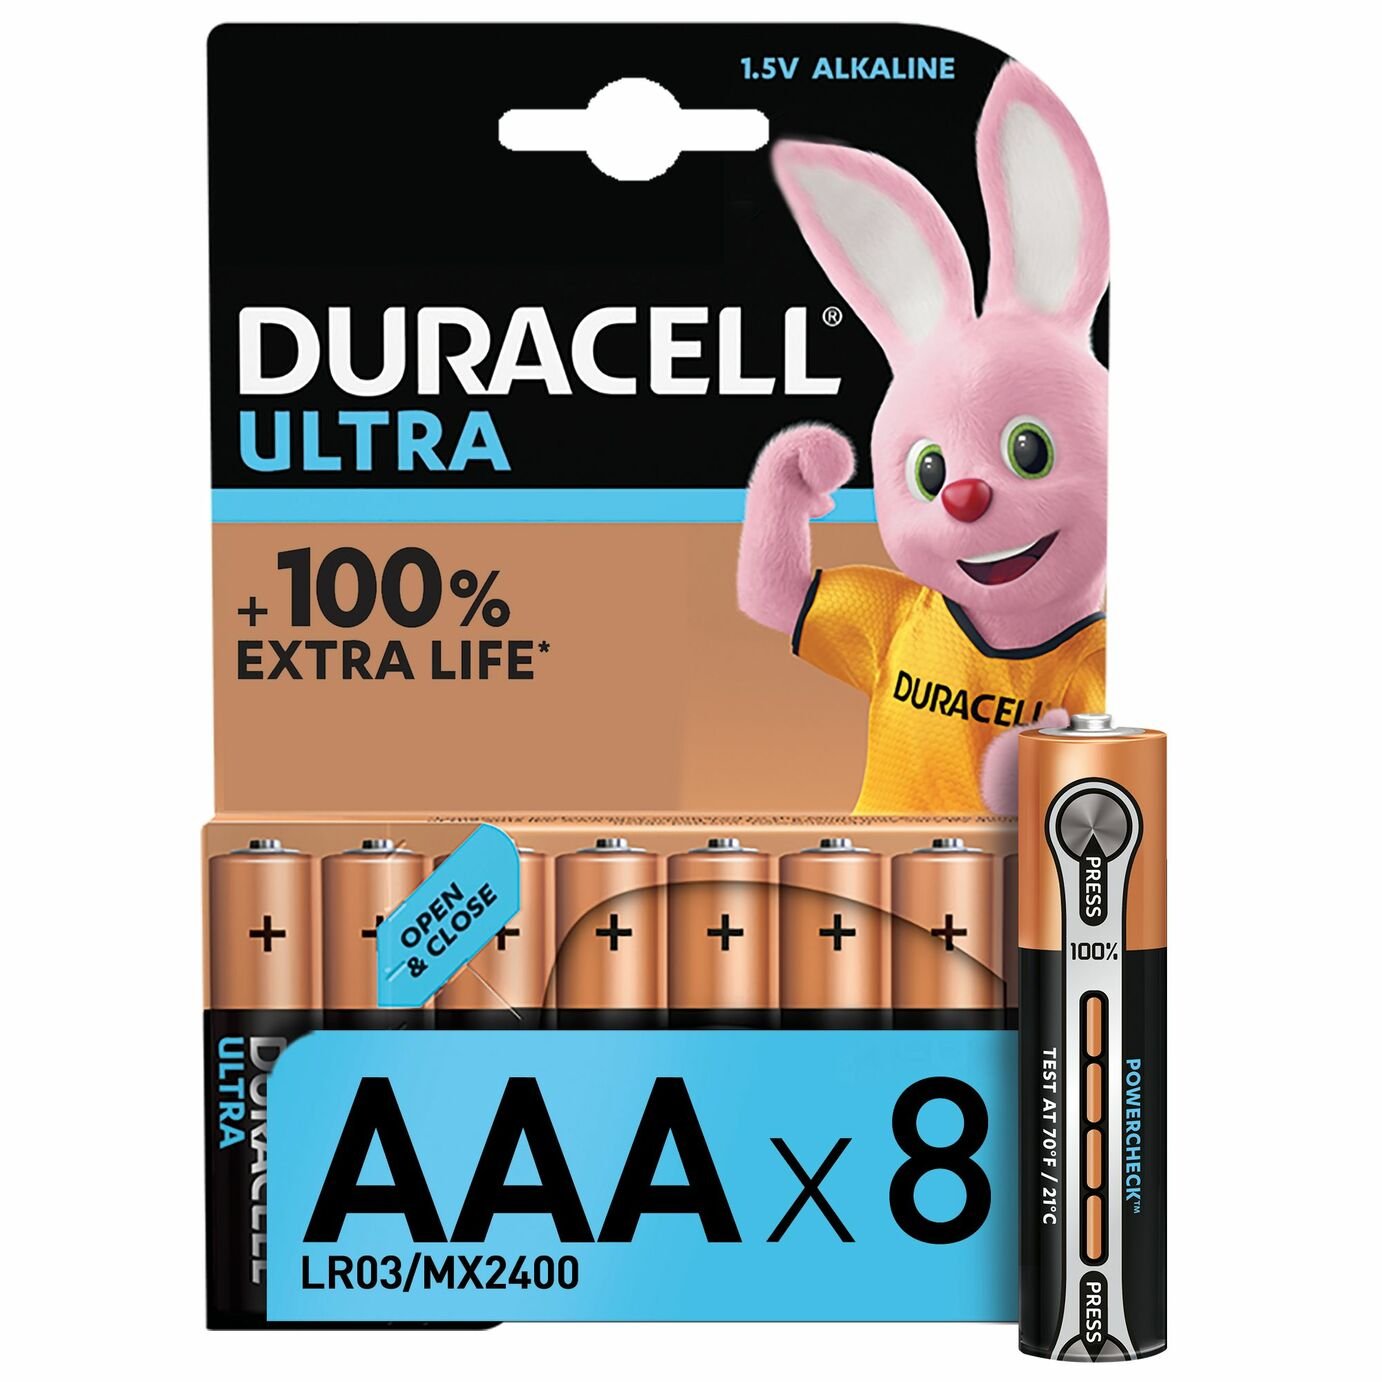 Duracell Ultra Alkaline AAA Batteries - Pack of 8